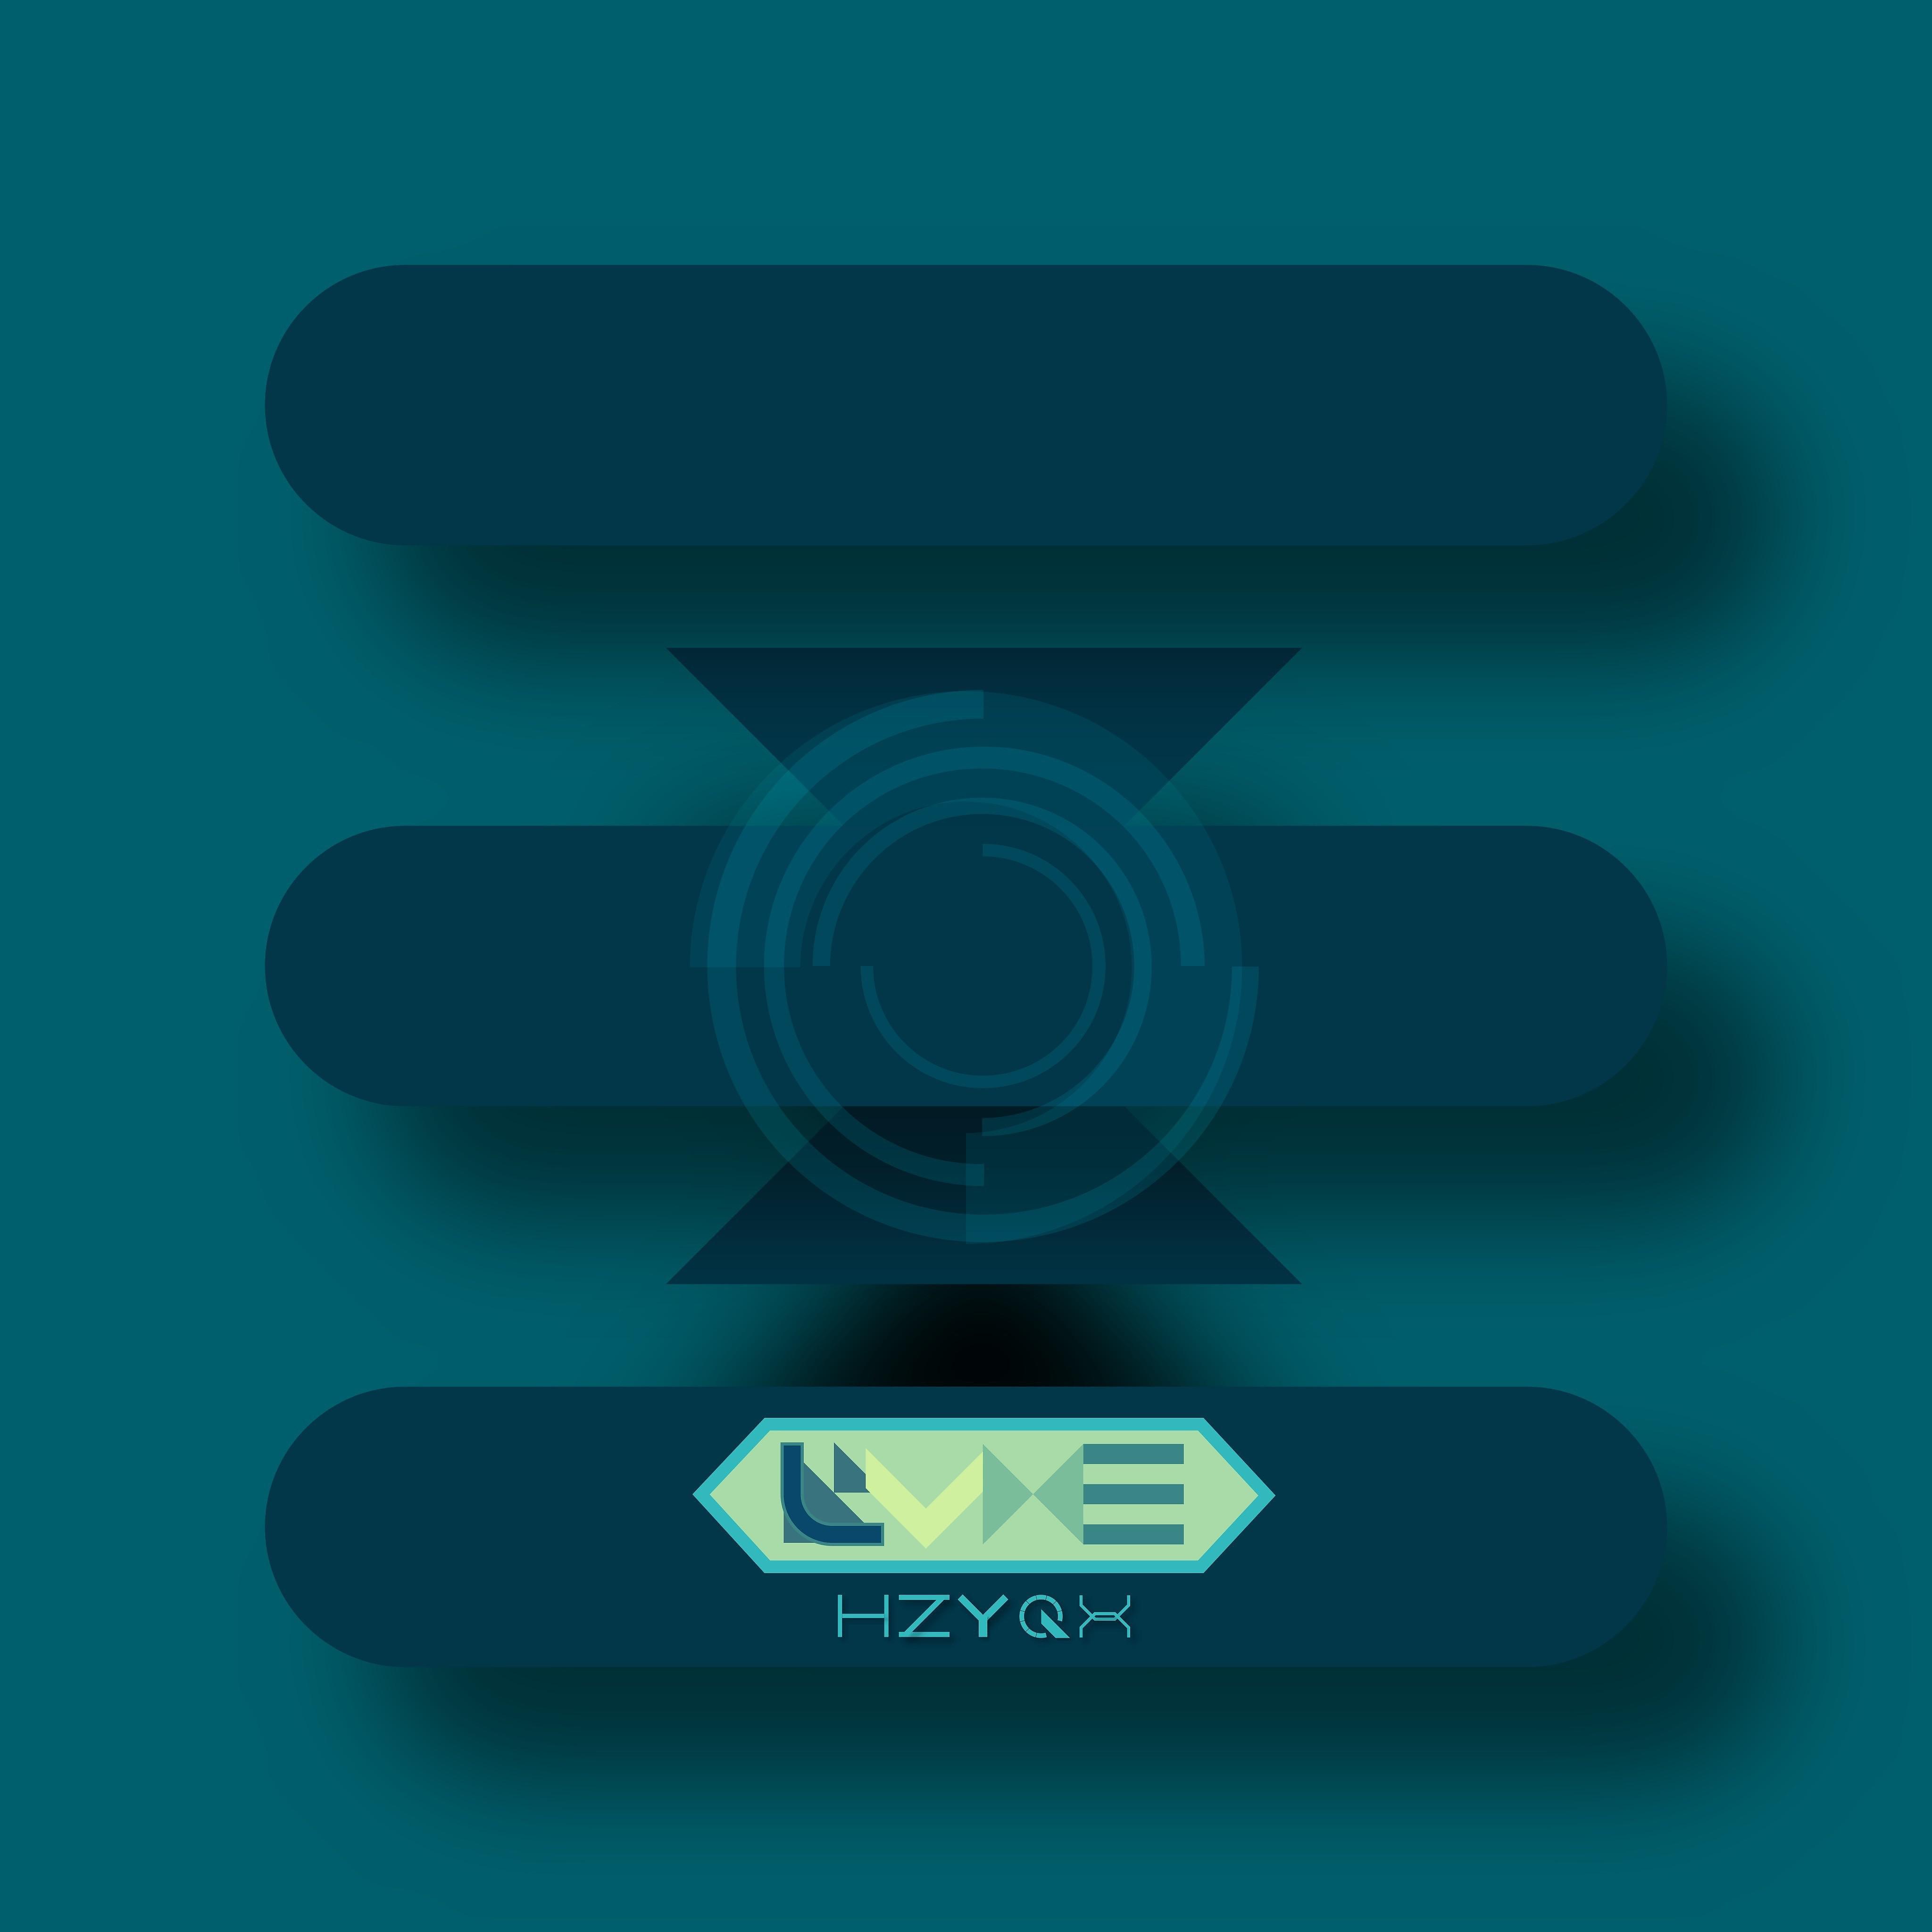 Постер альбома Vexon Rega